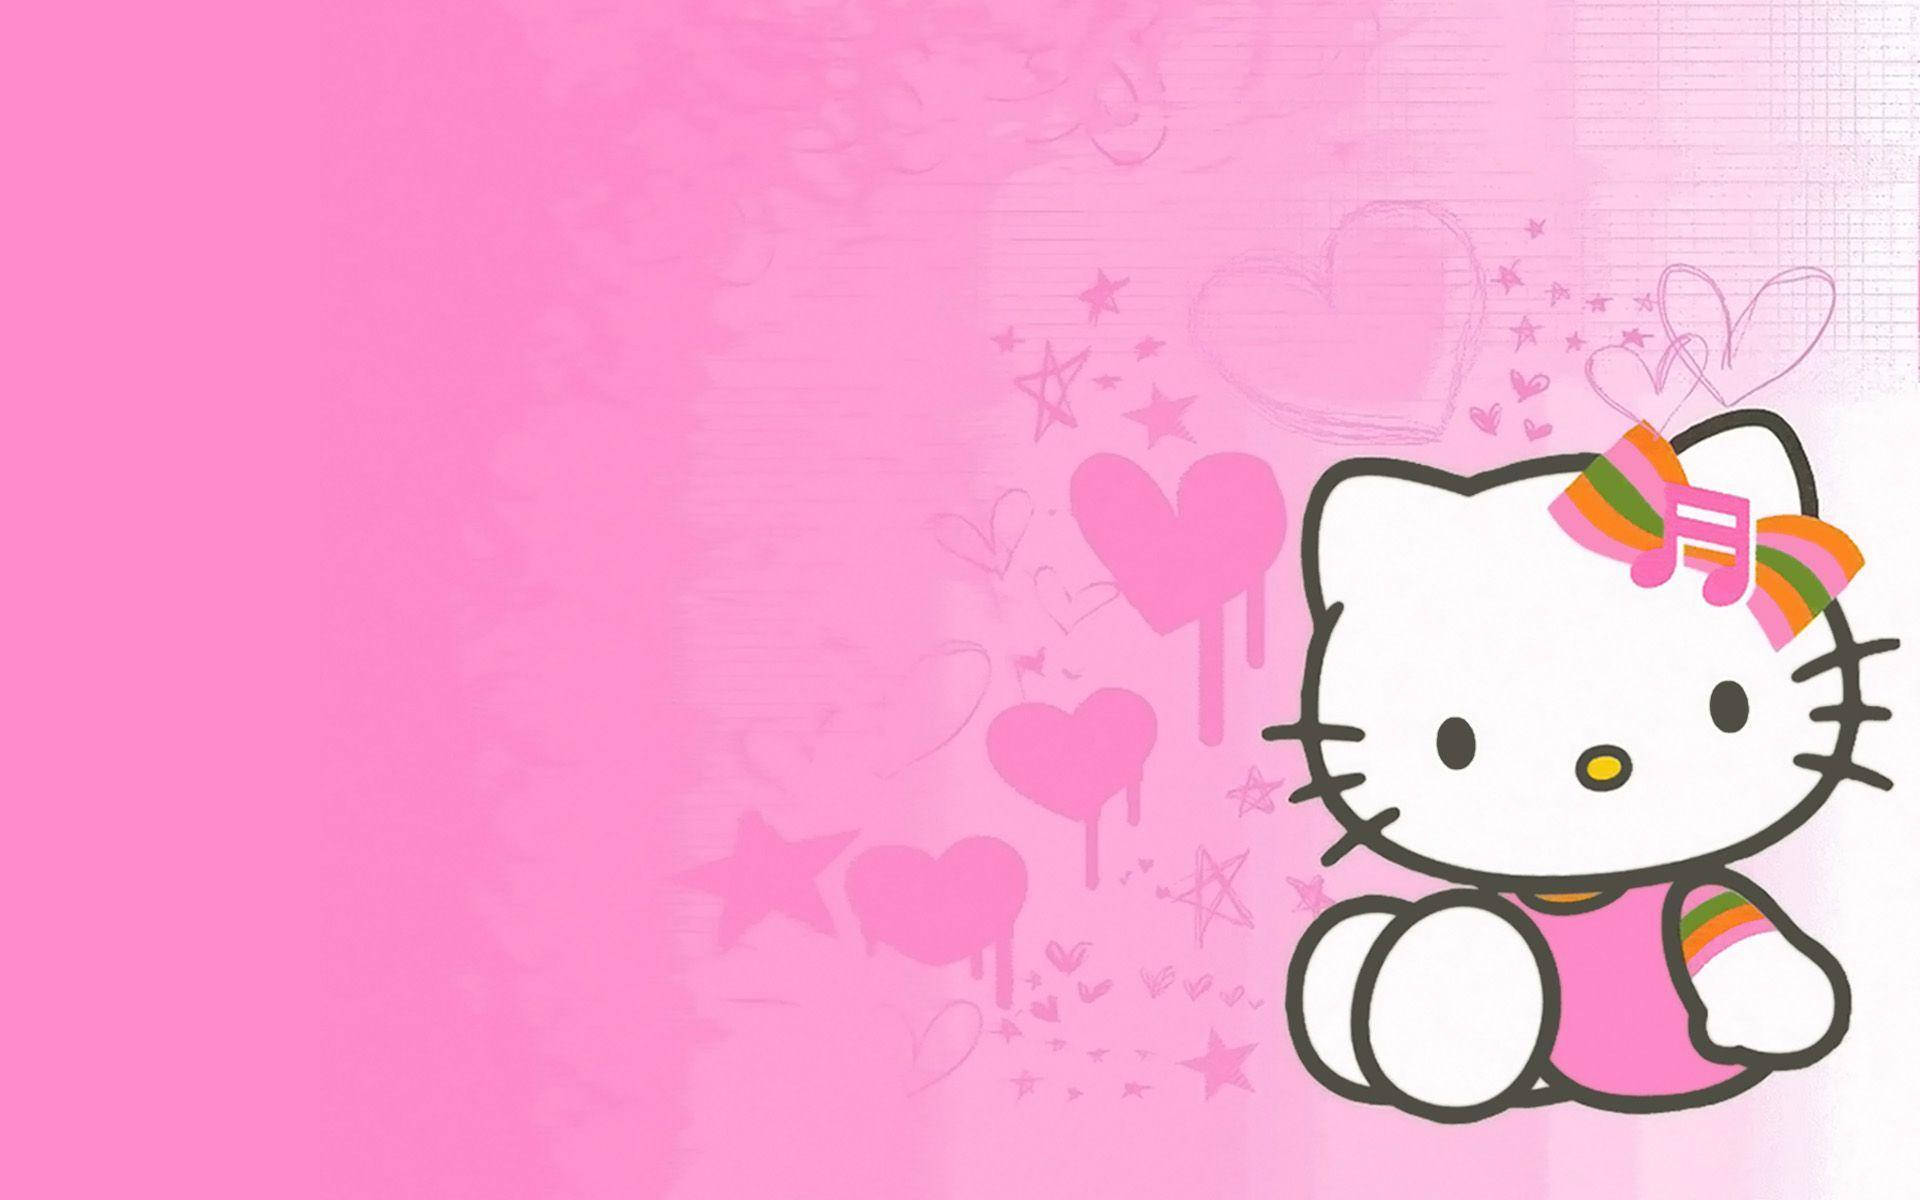 Lovely Pink Hello Kitty Desktop Wallpaper